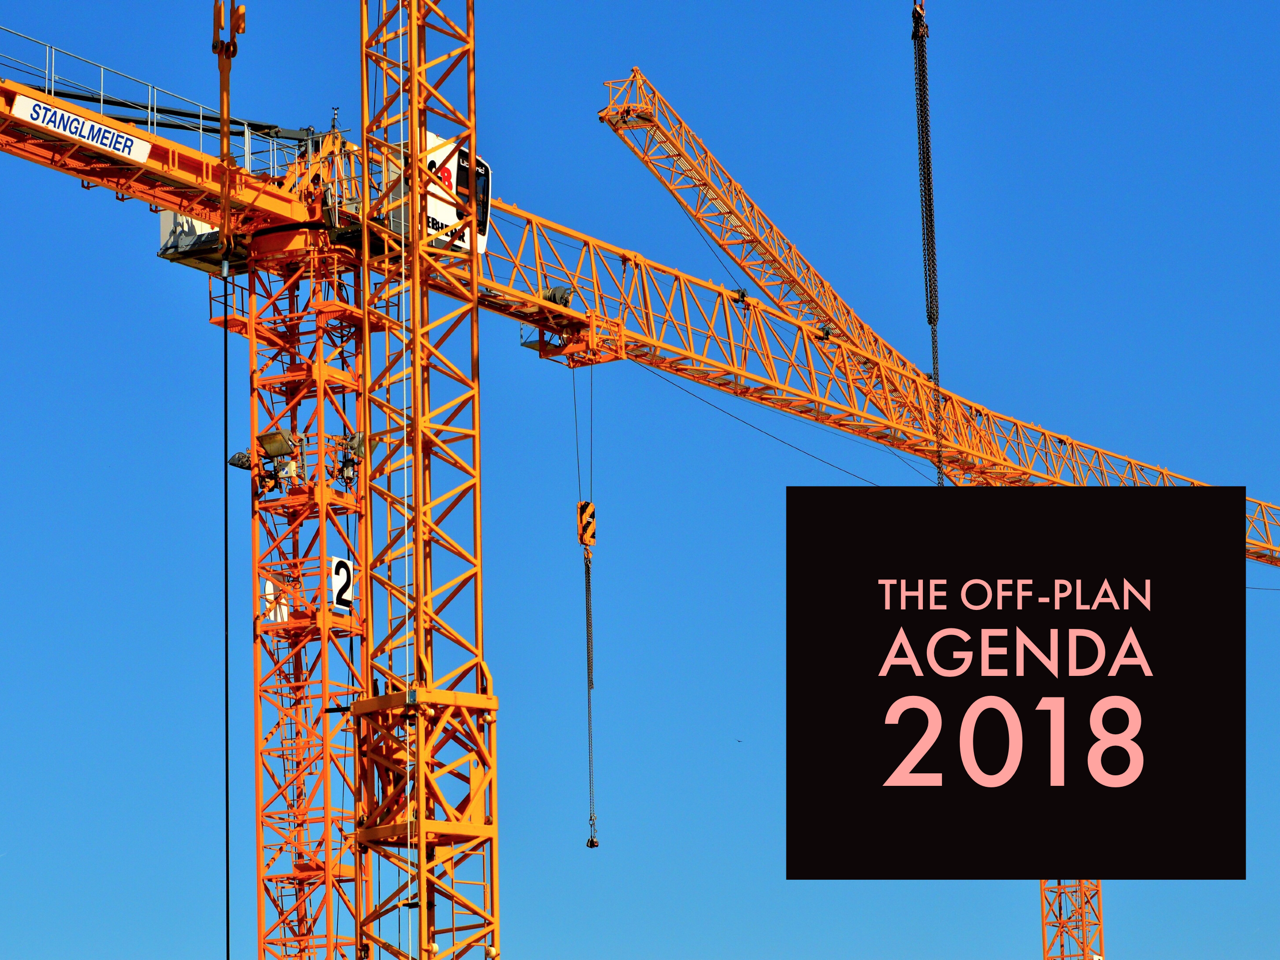 The 2018 off-plan development agenda Image